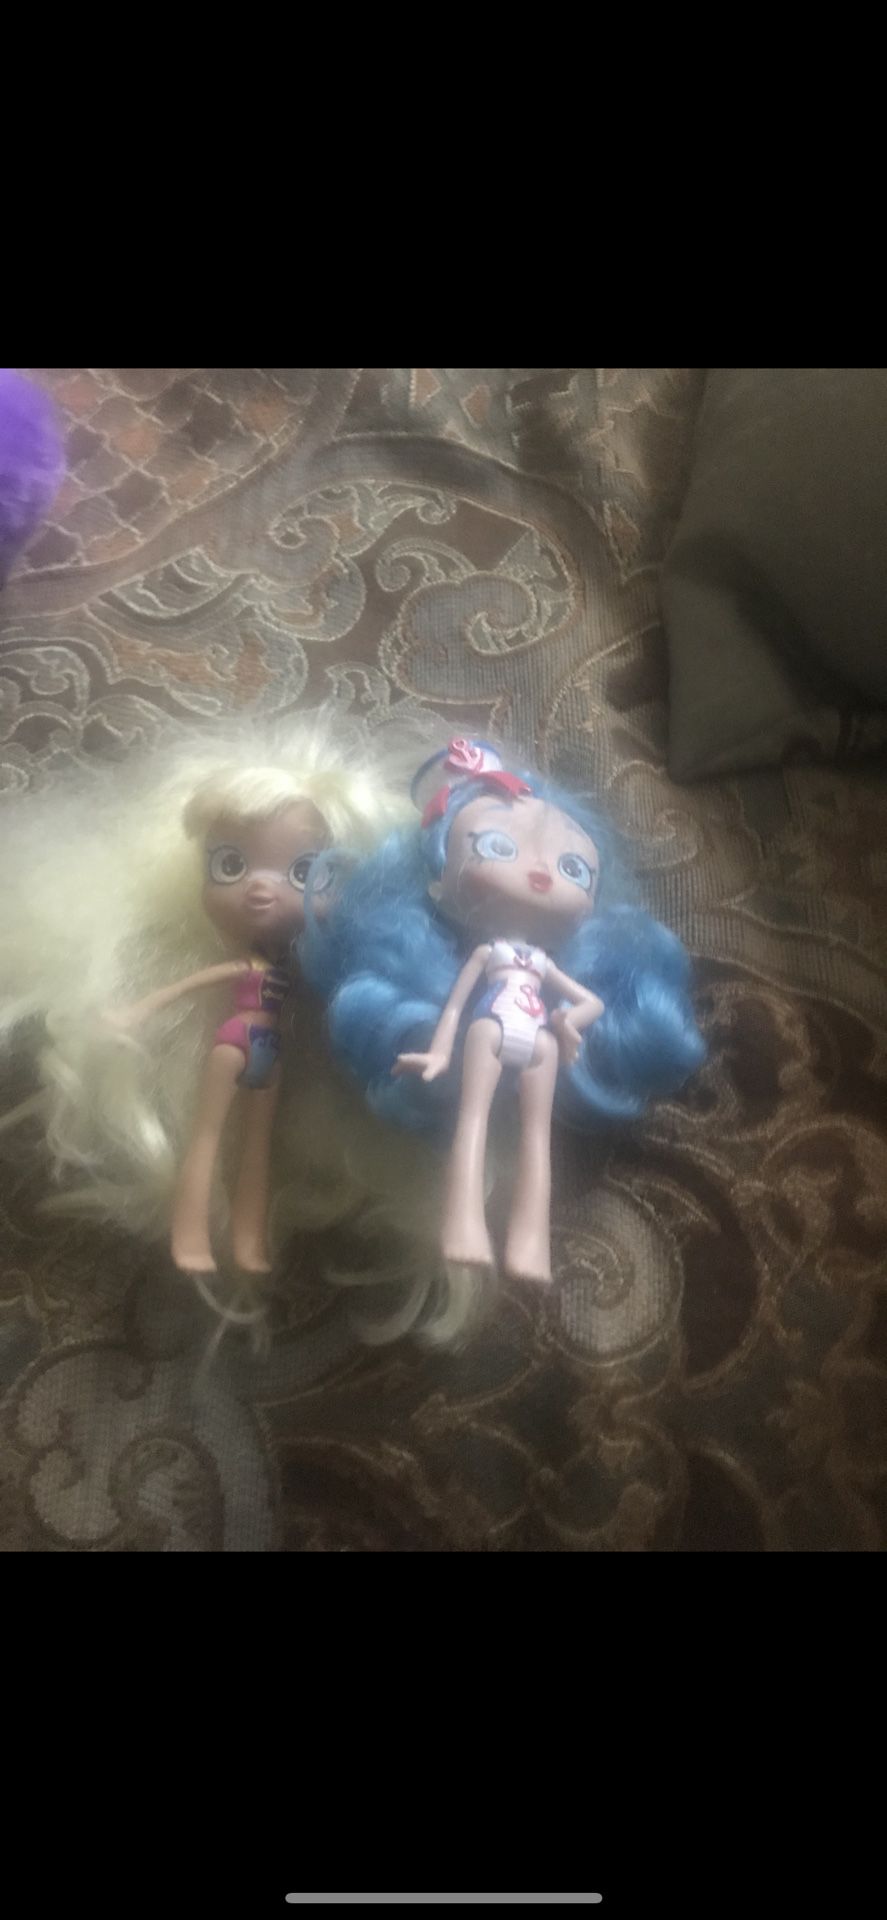 shopkin dolls